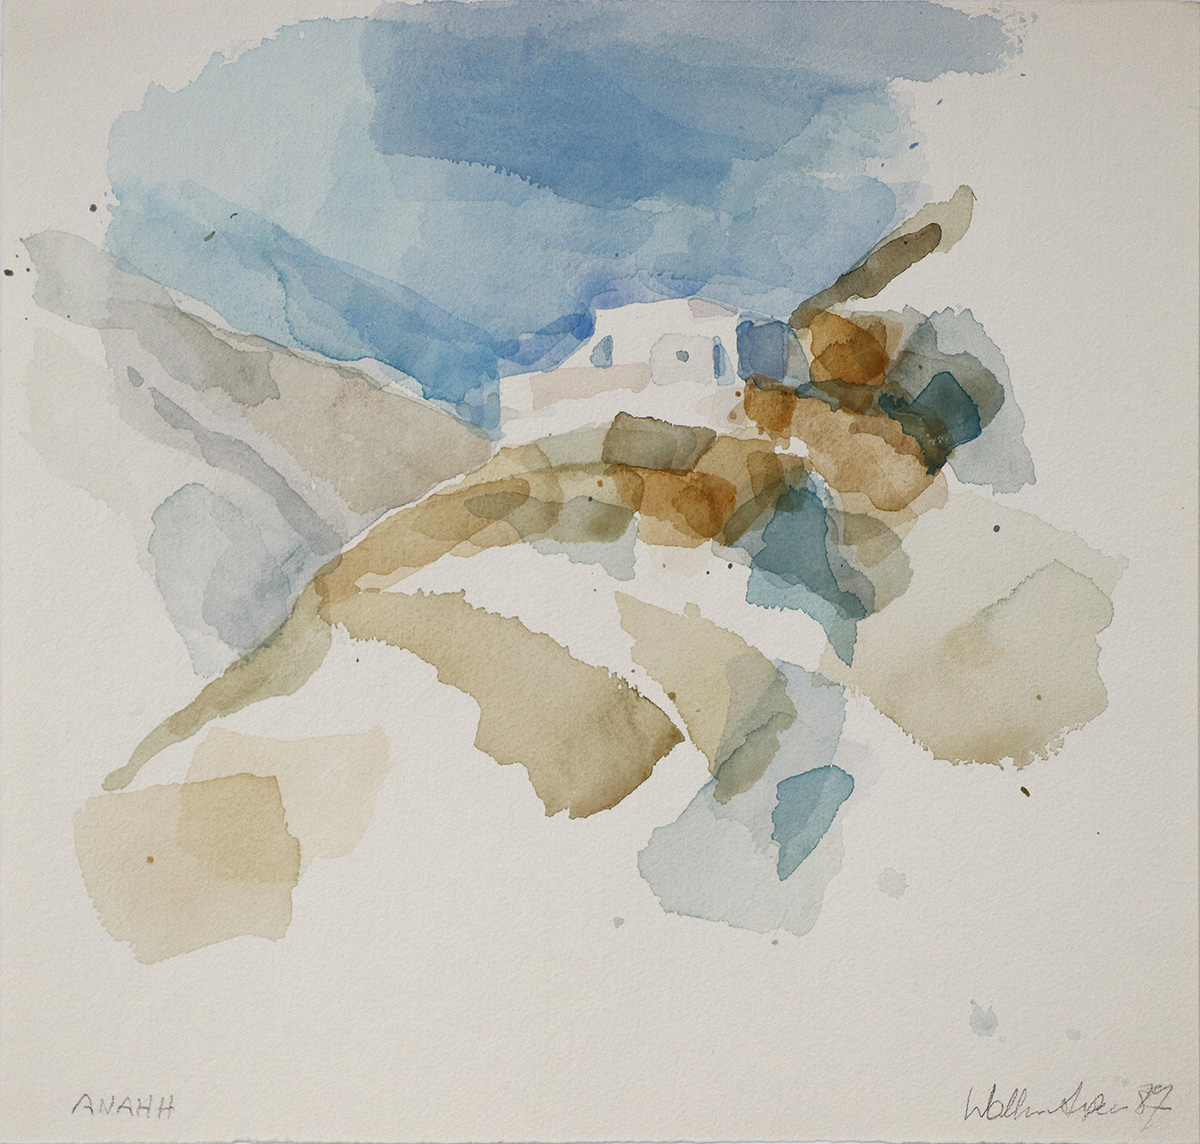 ANAHH, 198734 x 36 cmwatercolour on handmade paper